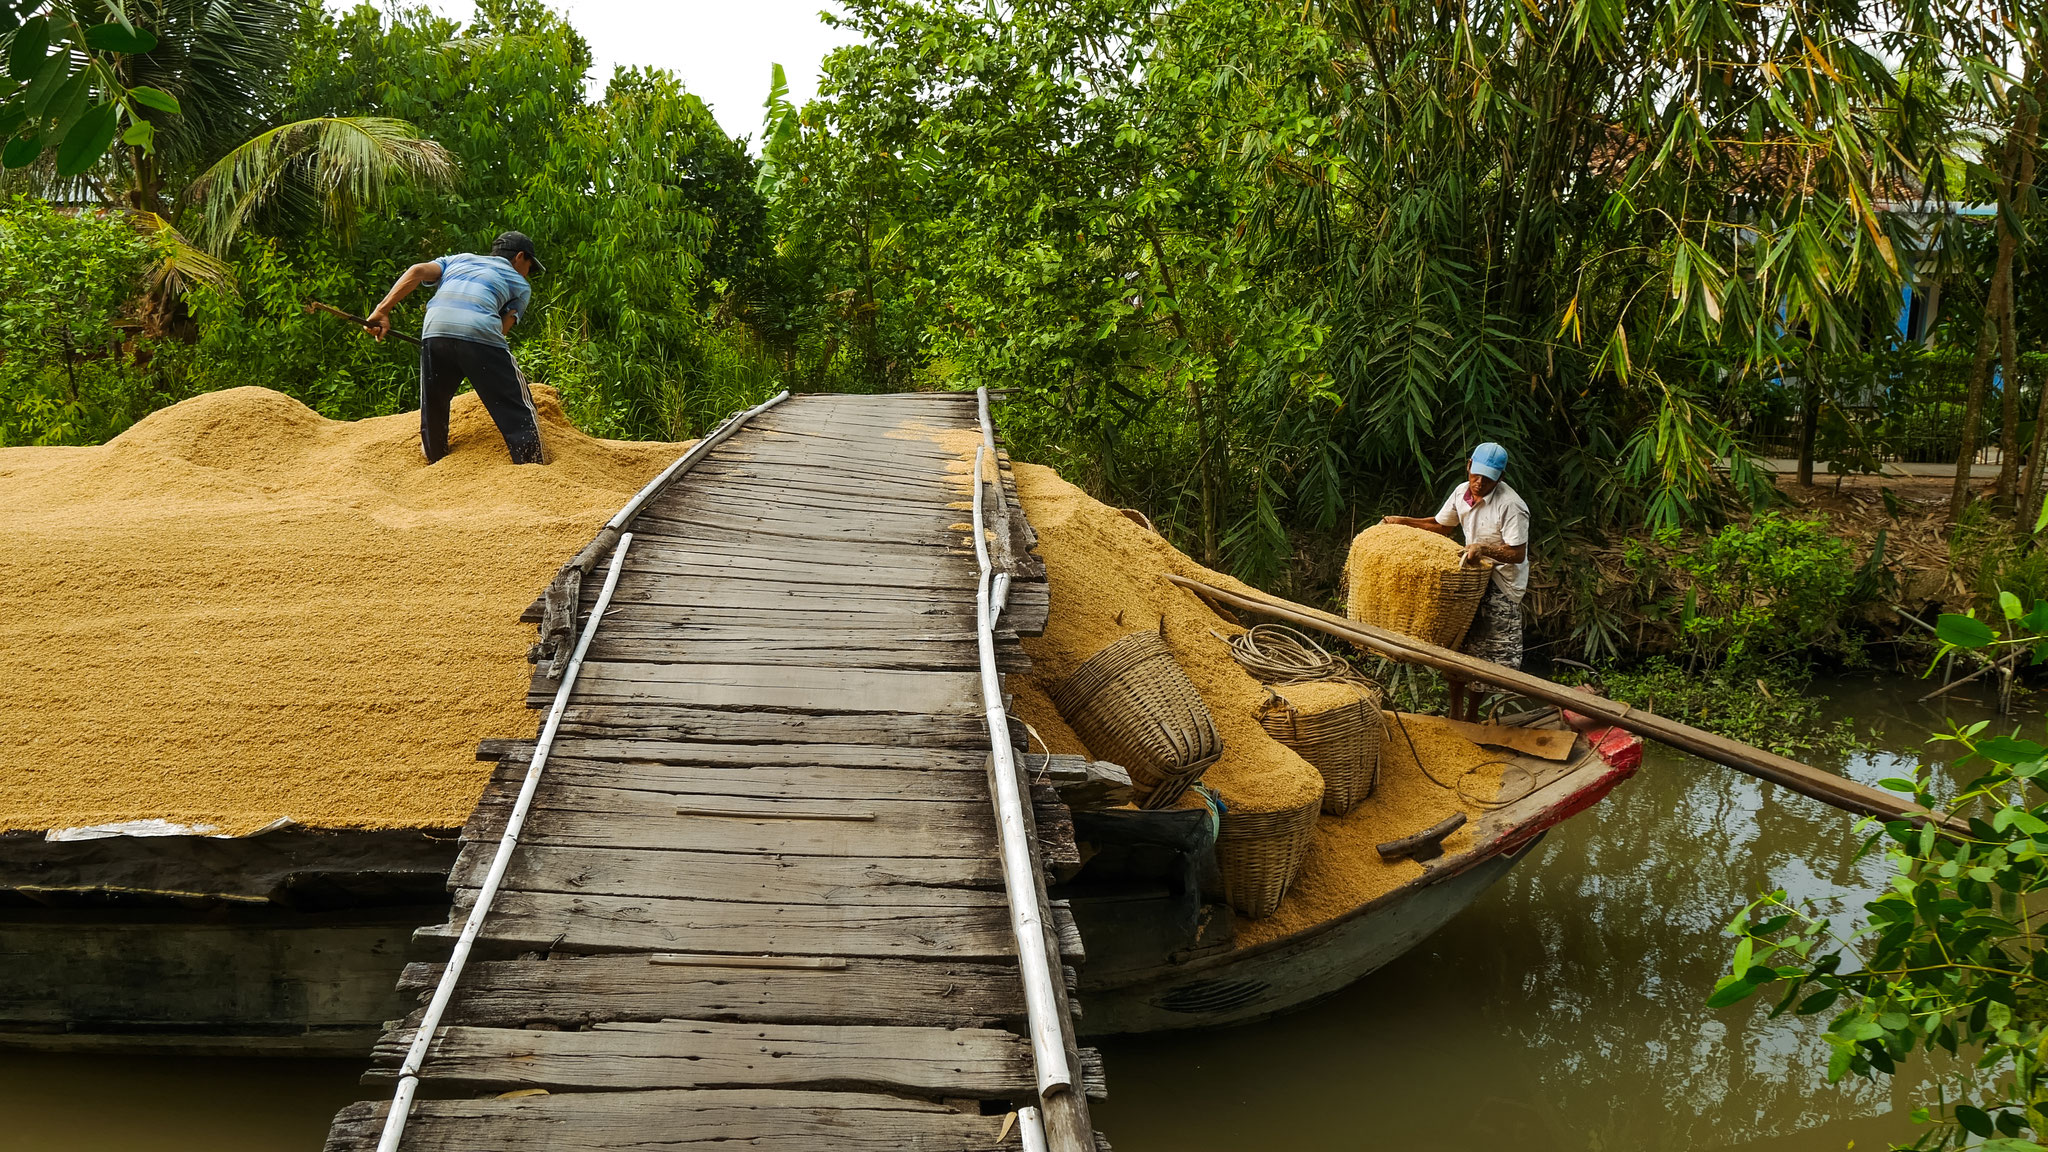 unterwegs im Mekong Delta - Ladung umfrachten :)